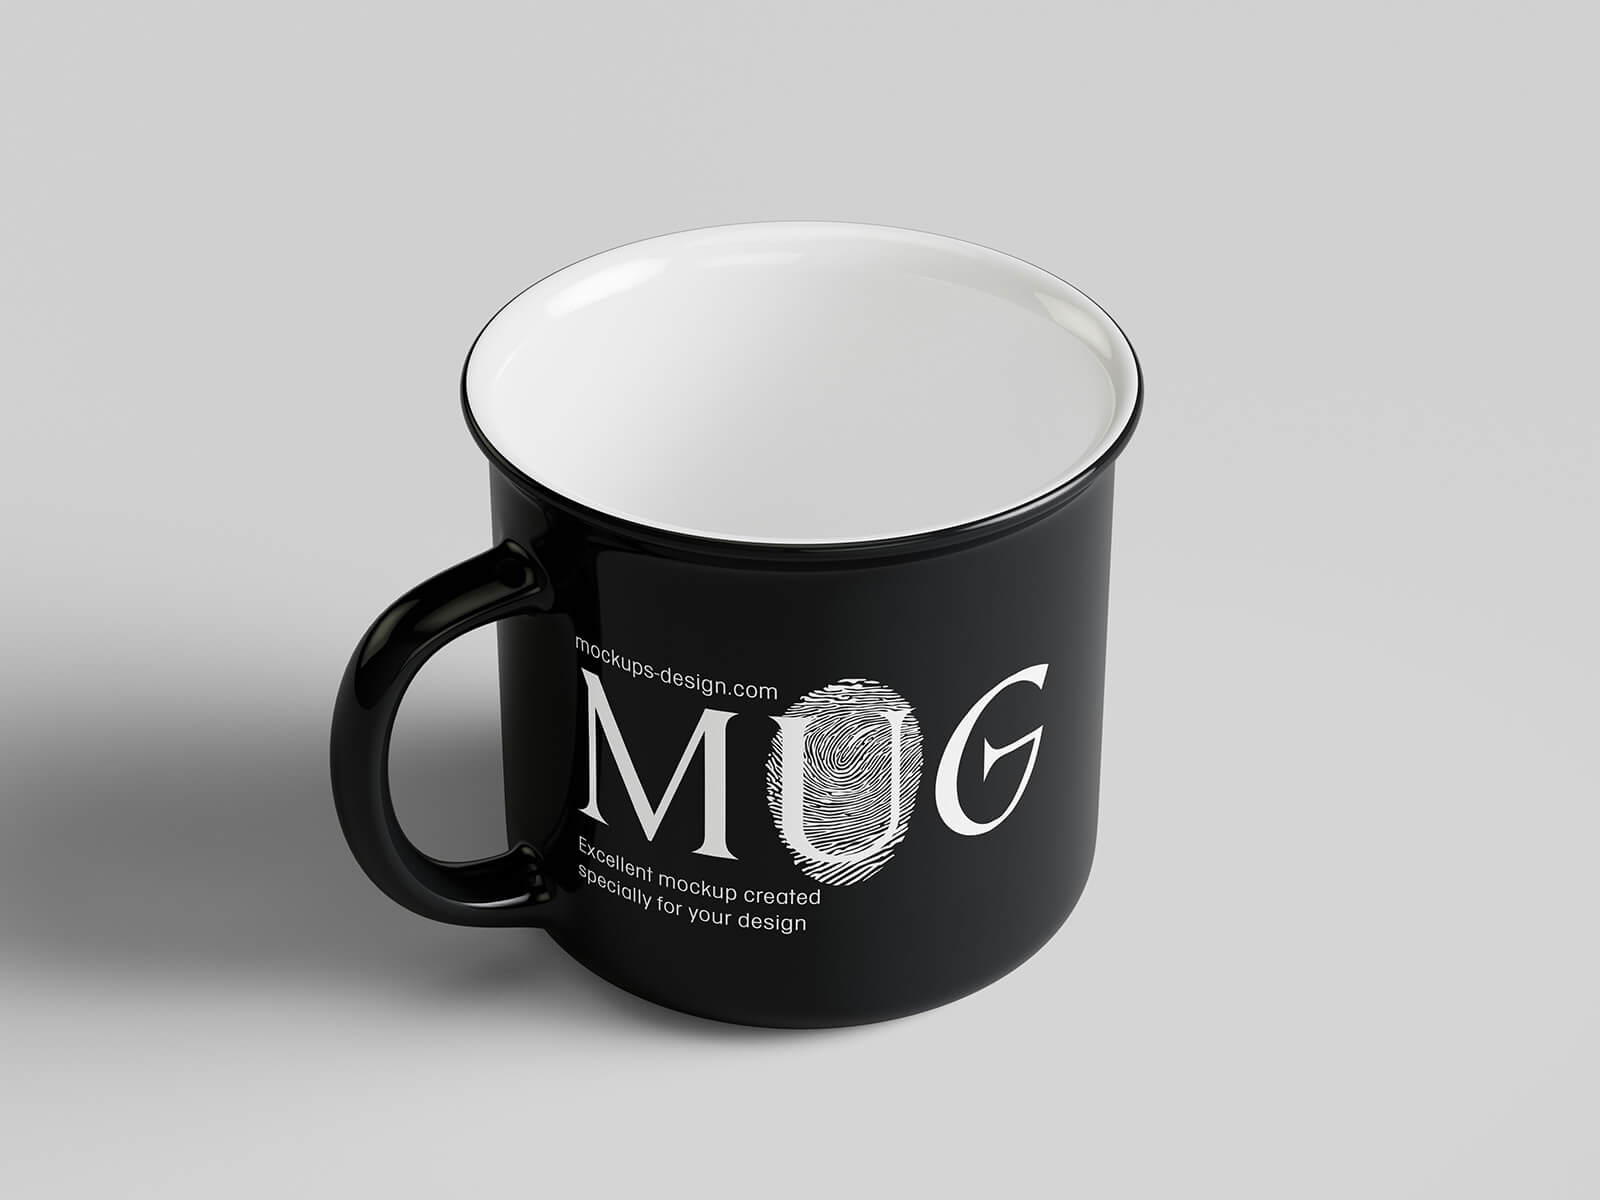 5 Free Customizable Ceramic Mug Mockup PSD Files